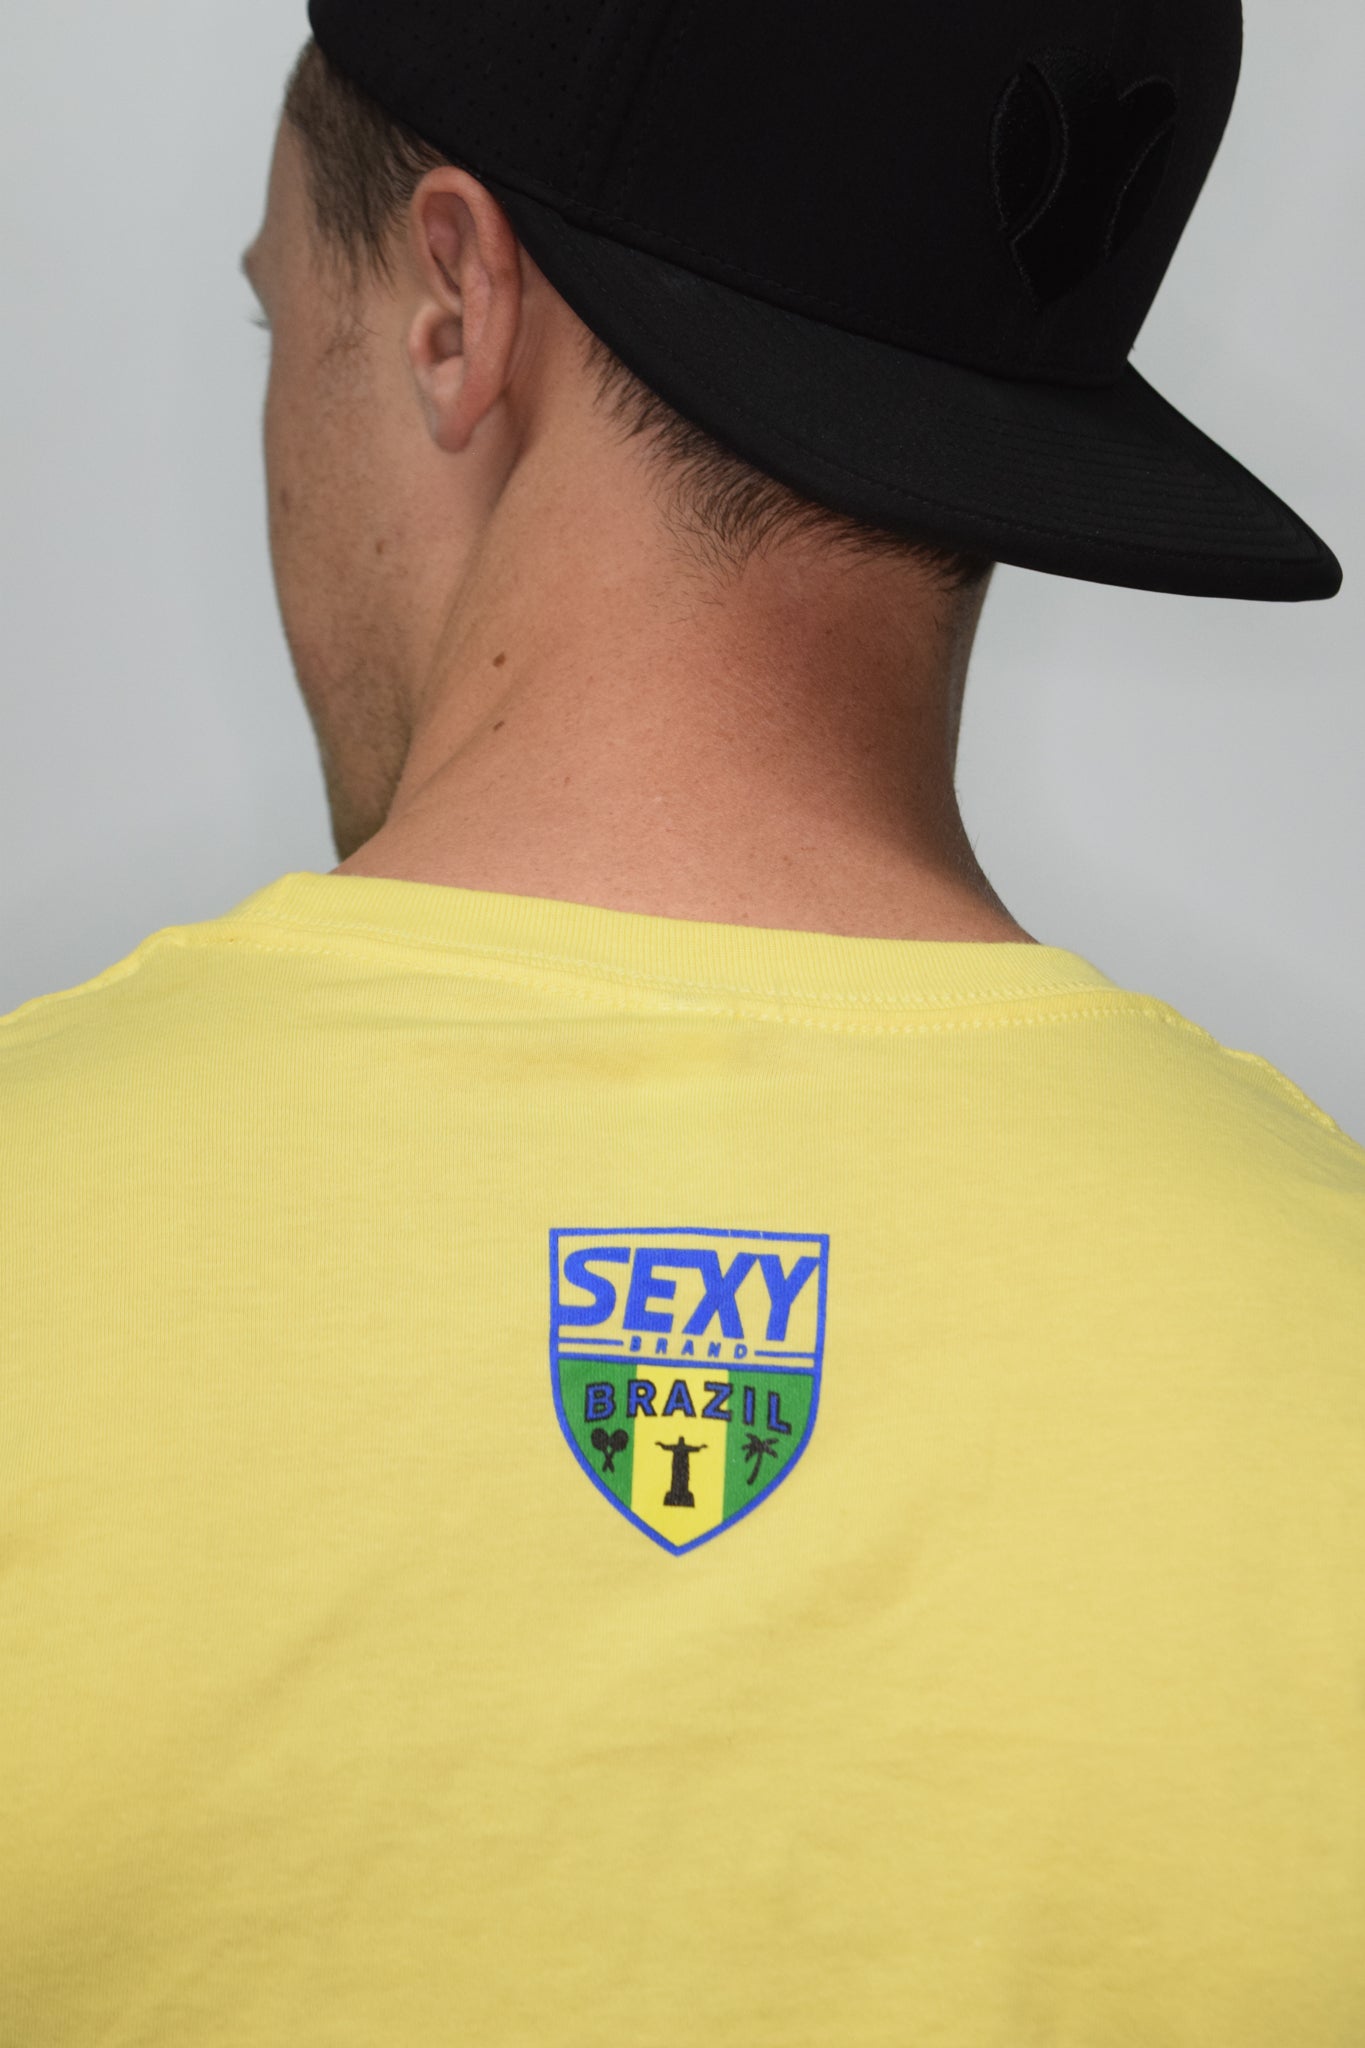 SEXY Definition Tee - Brazil Team